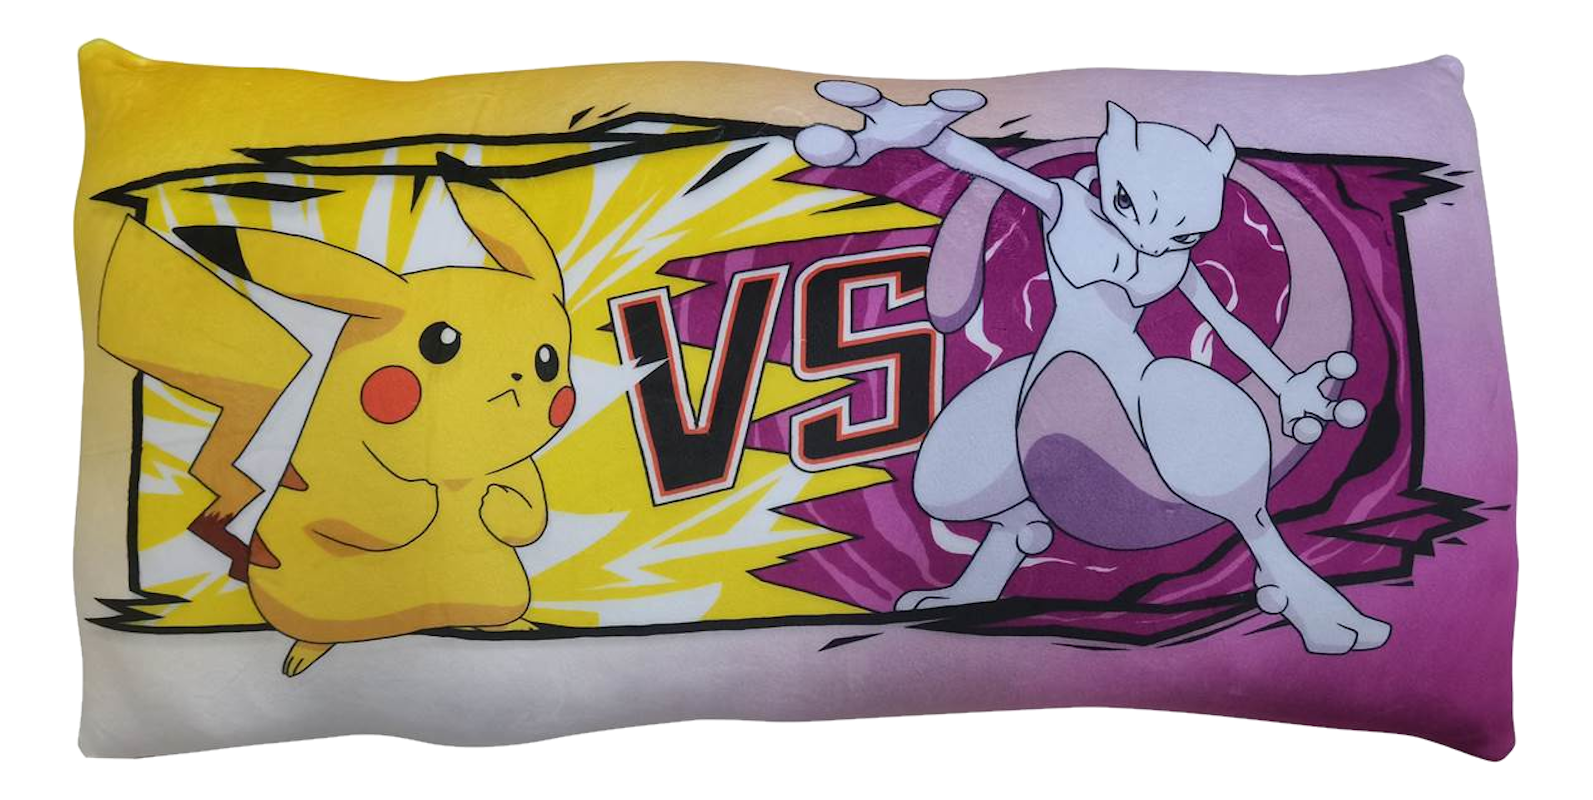 LYO Pokémon - Pikachu vs Mewtu - Kissen (Mehrfarbig)